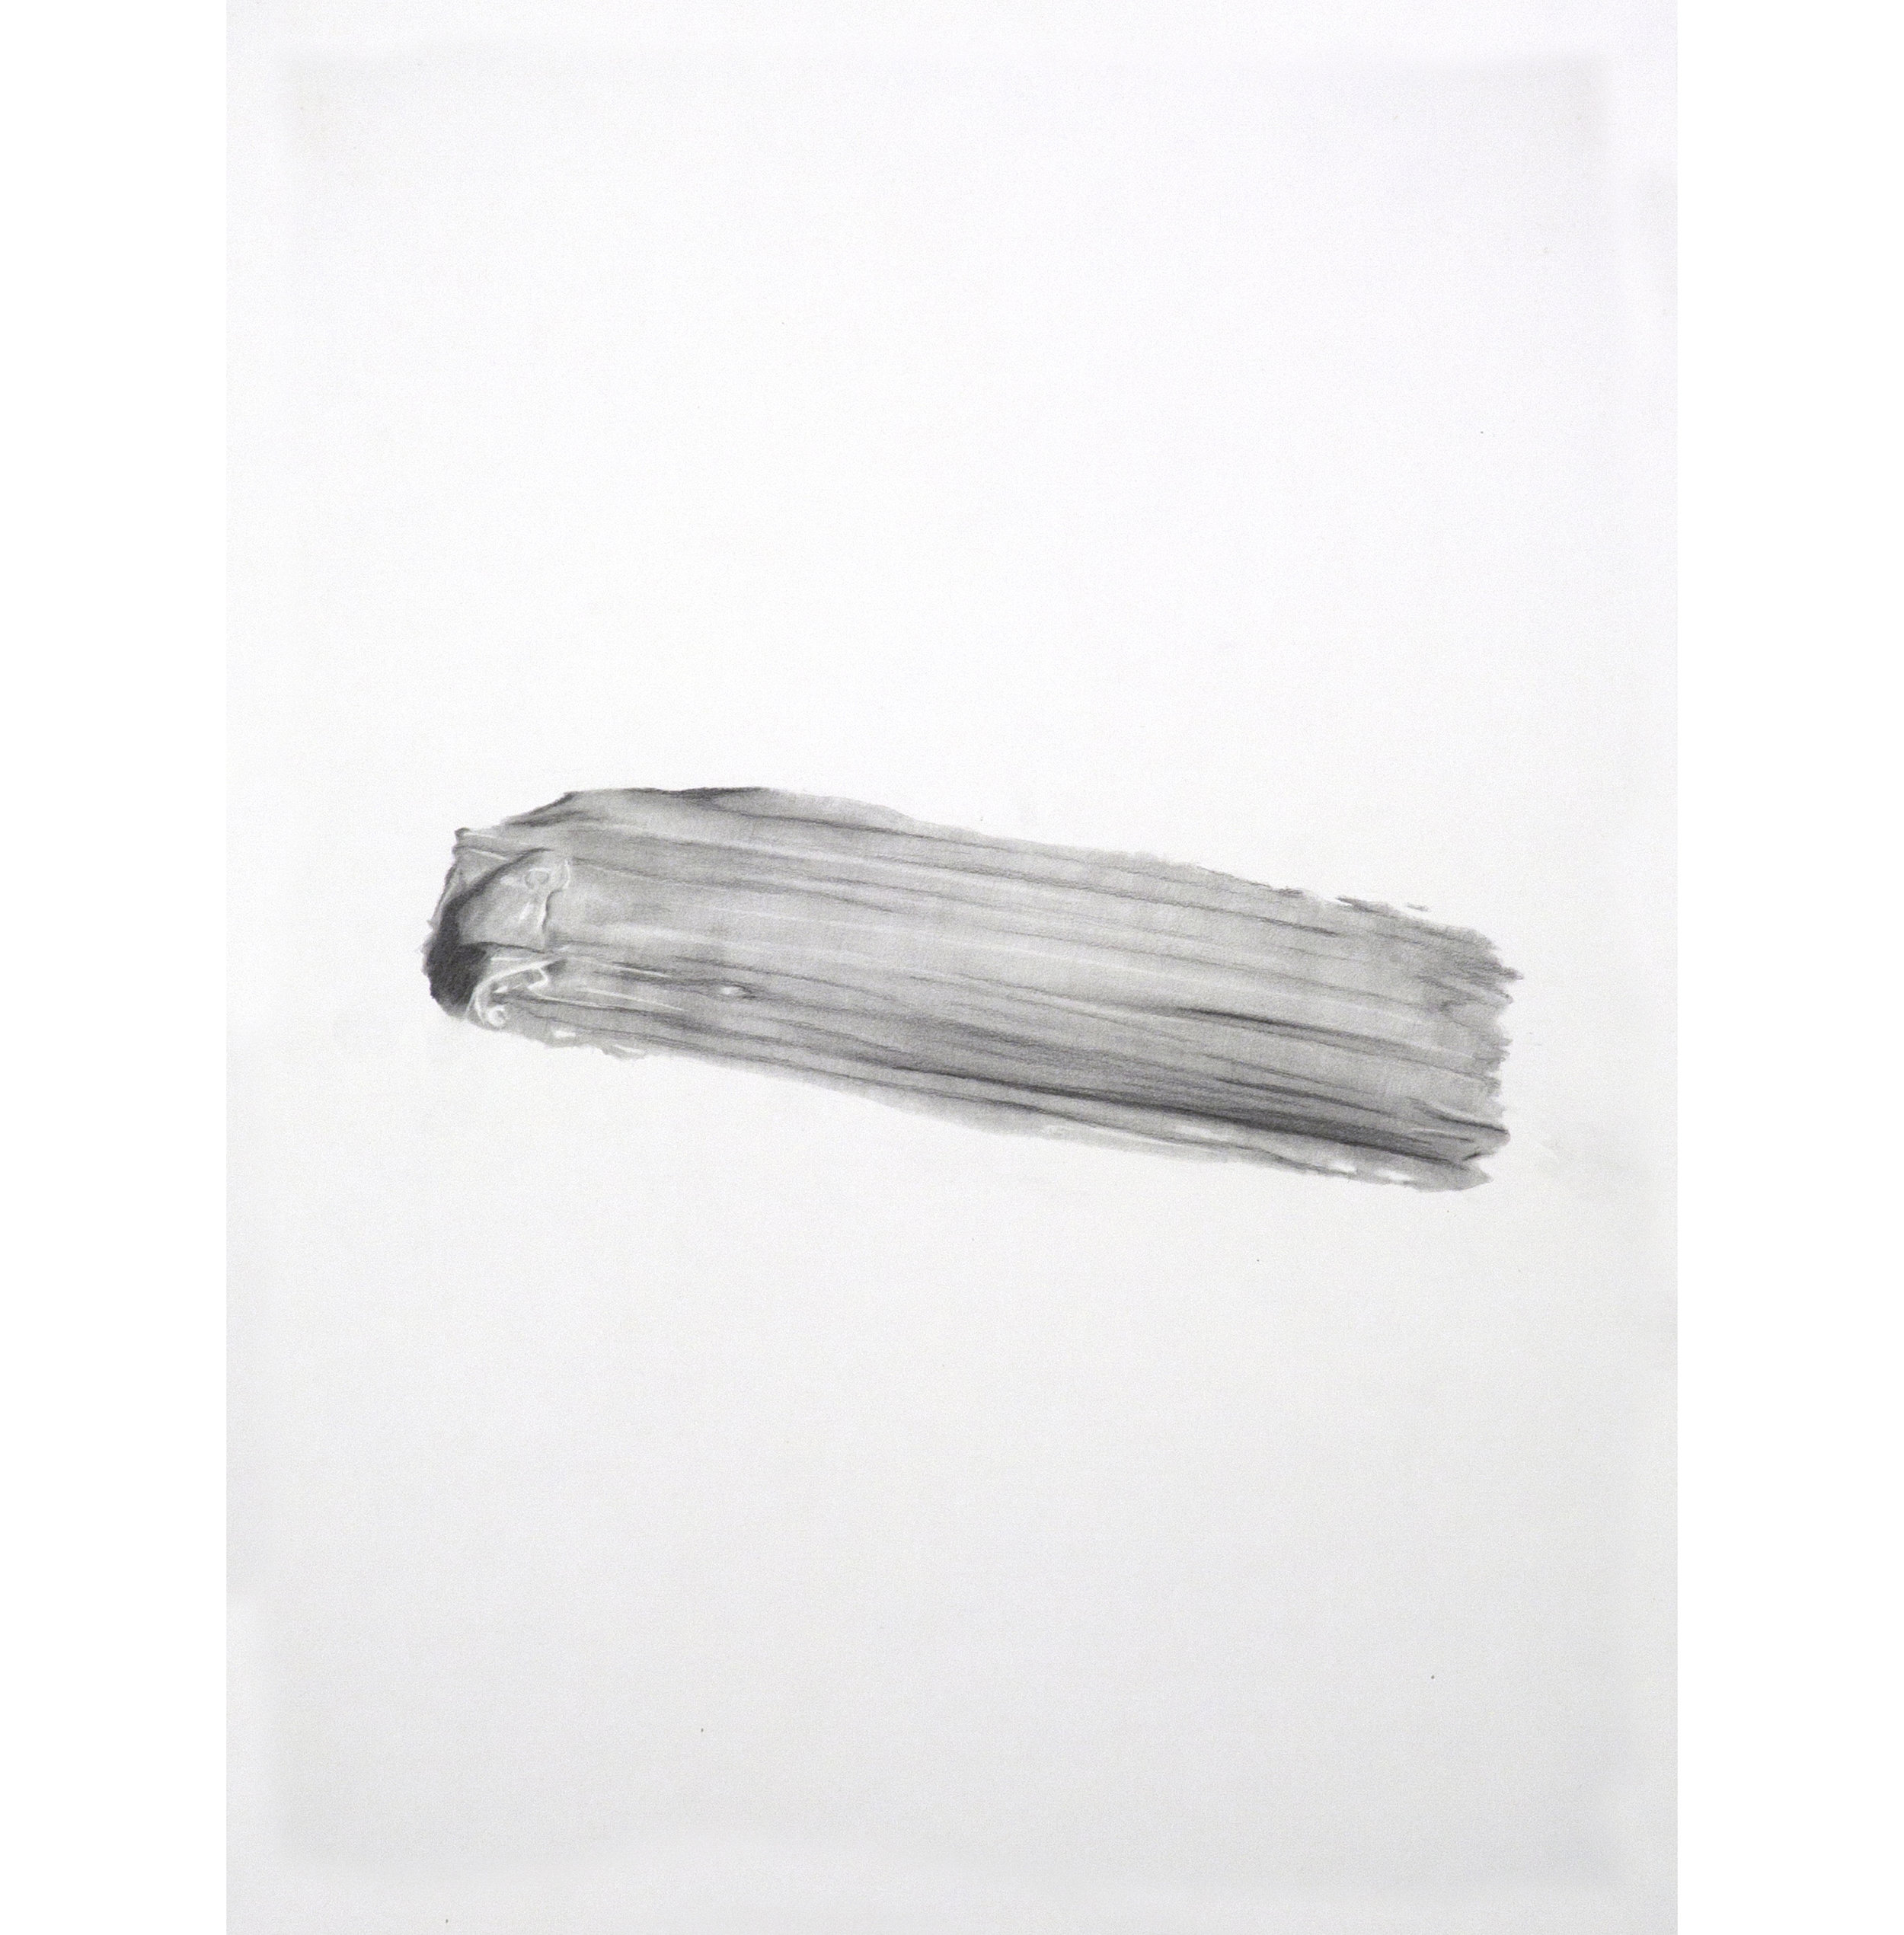 Lexicon 20, 2013, graphite on paper, 24” x 18”